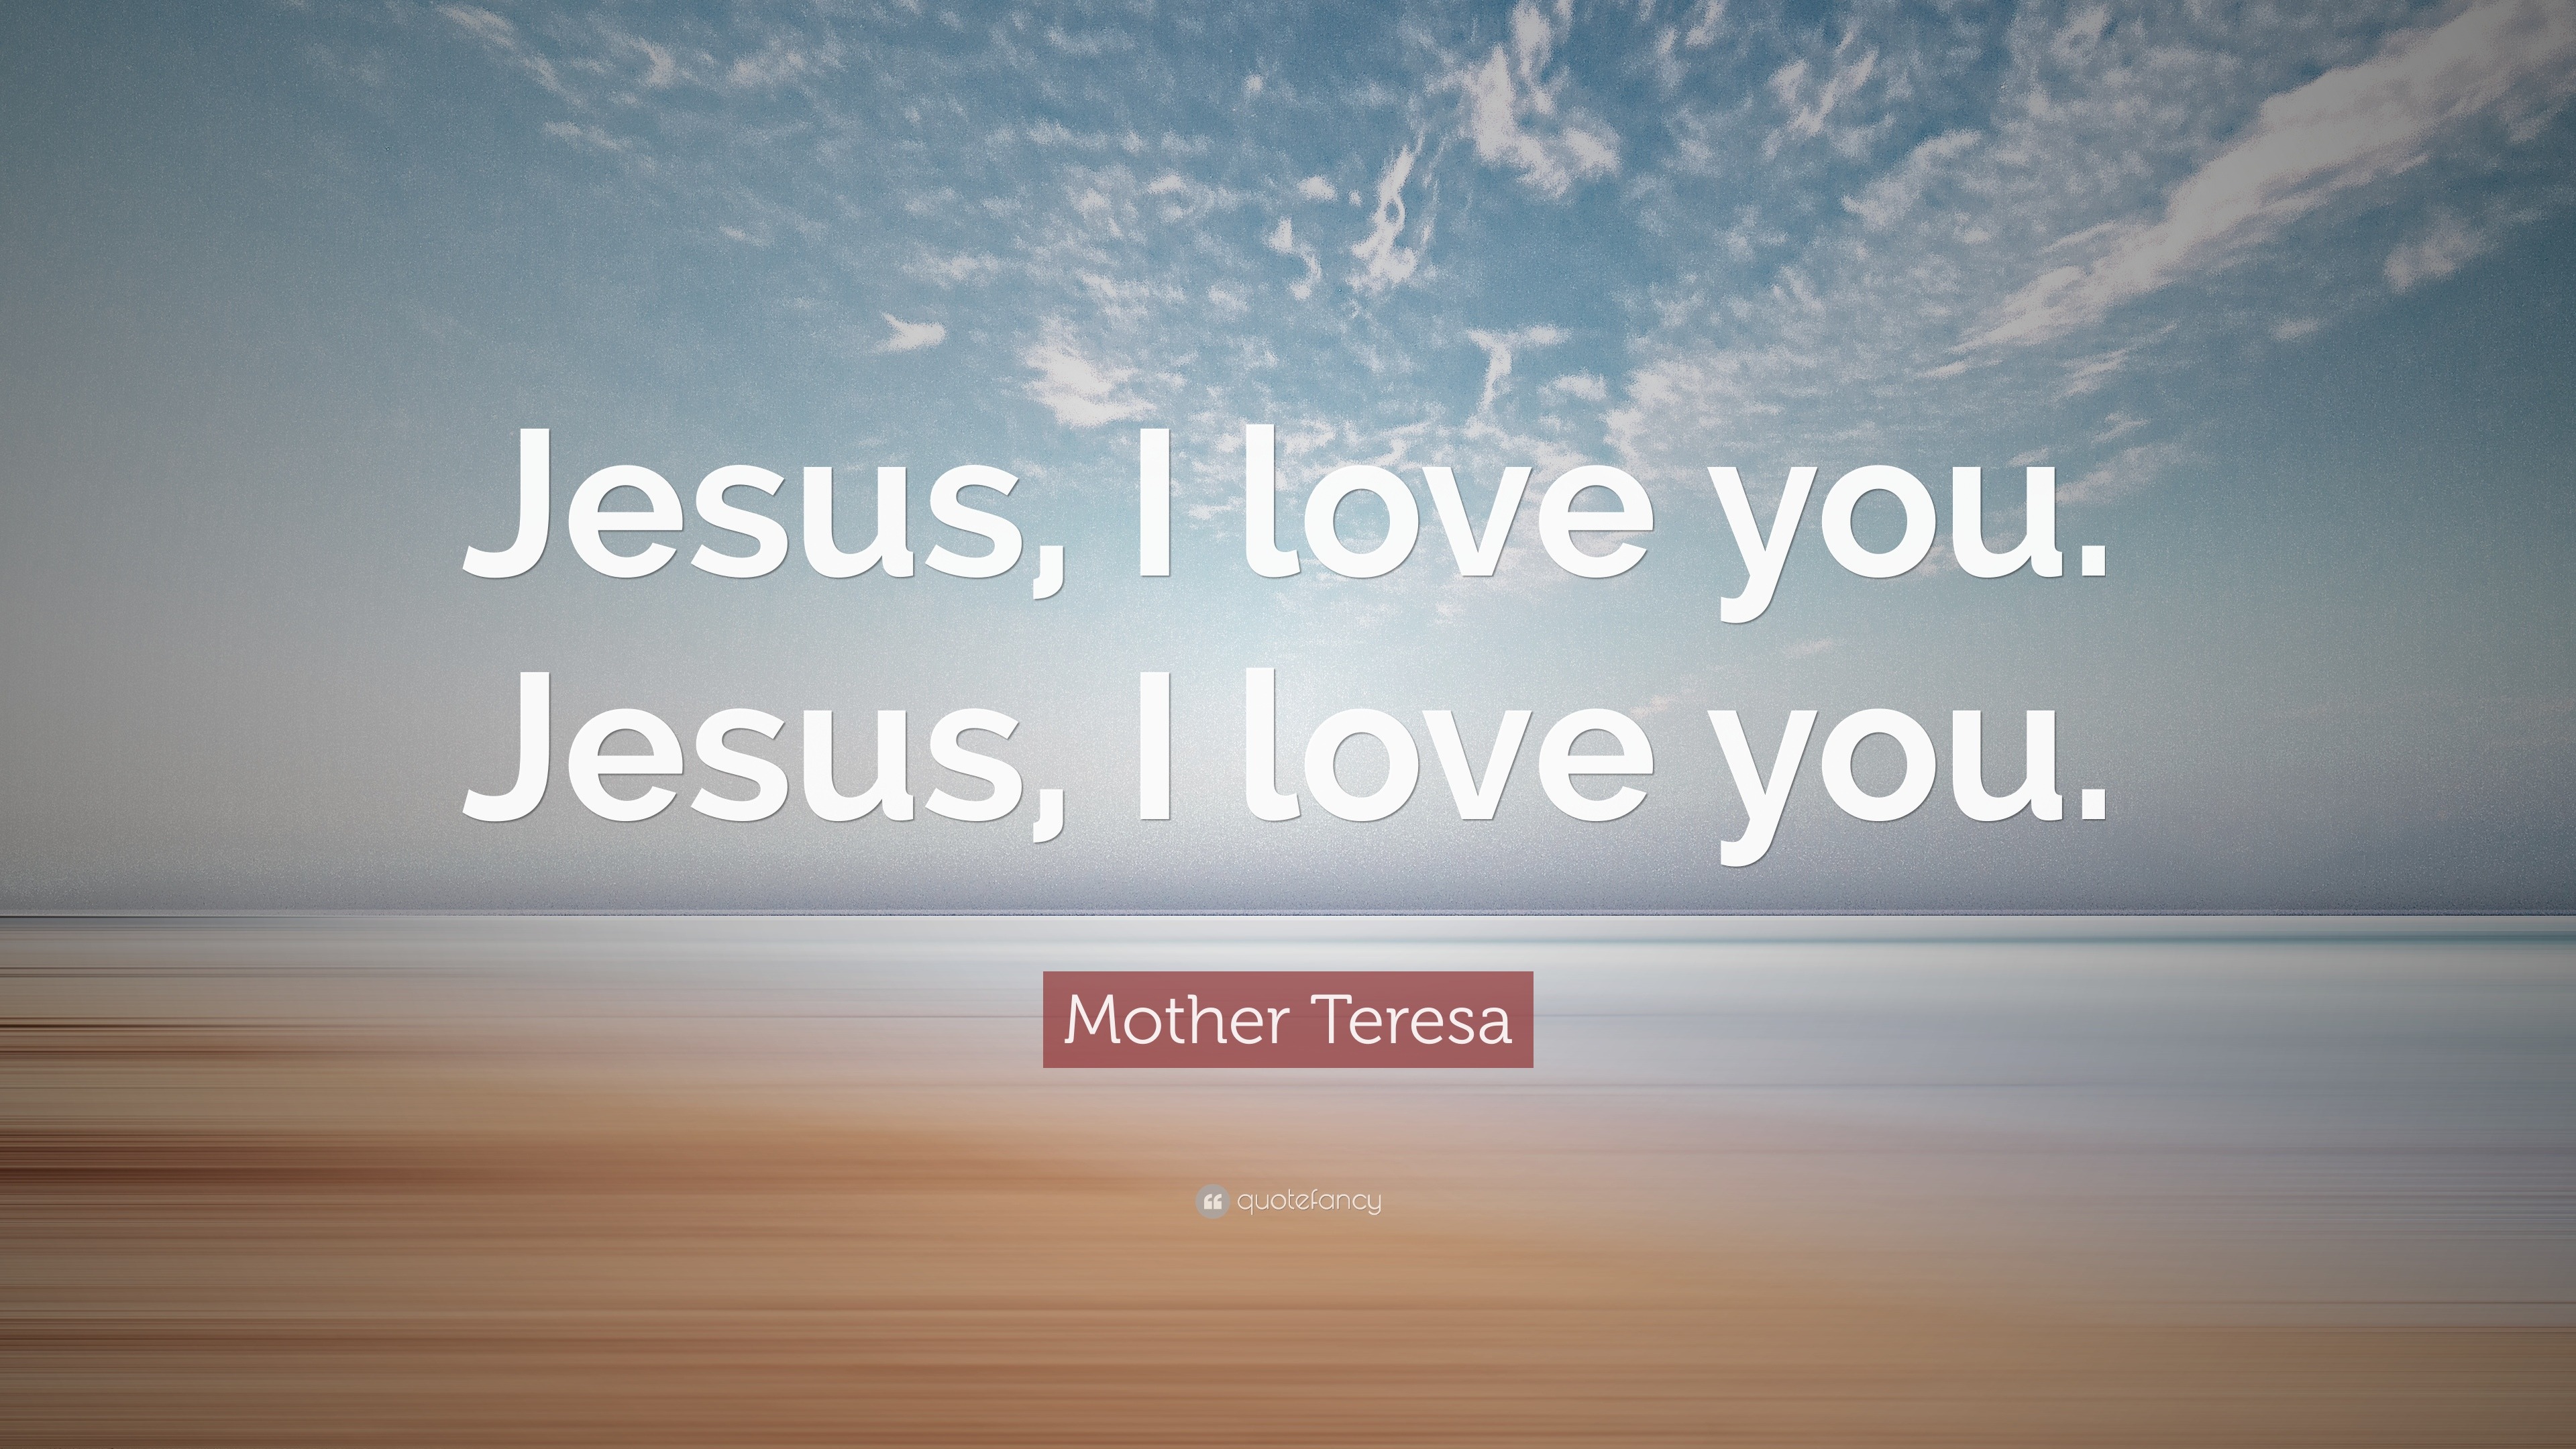 Mother Teresa Quote “Jesus I love you Jesus I love you